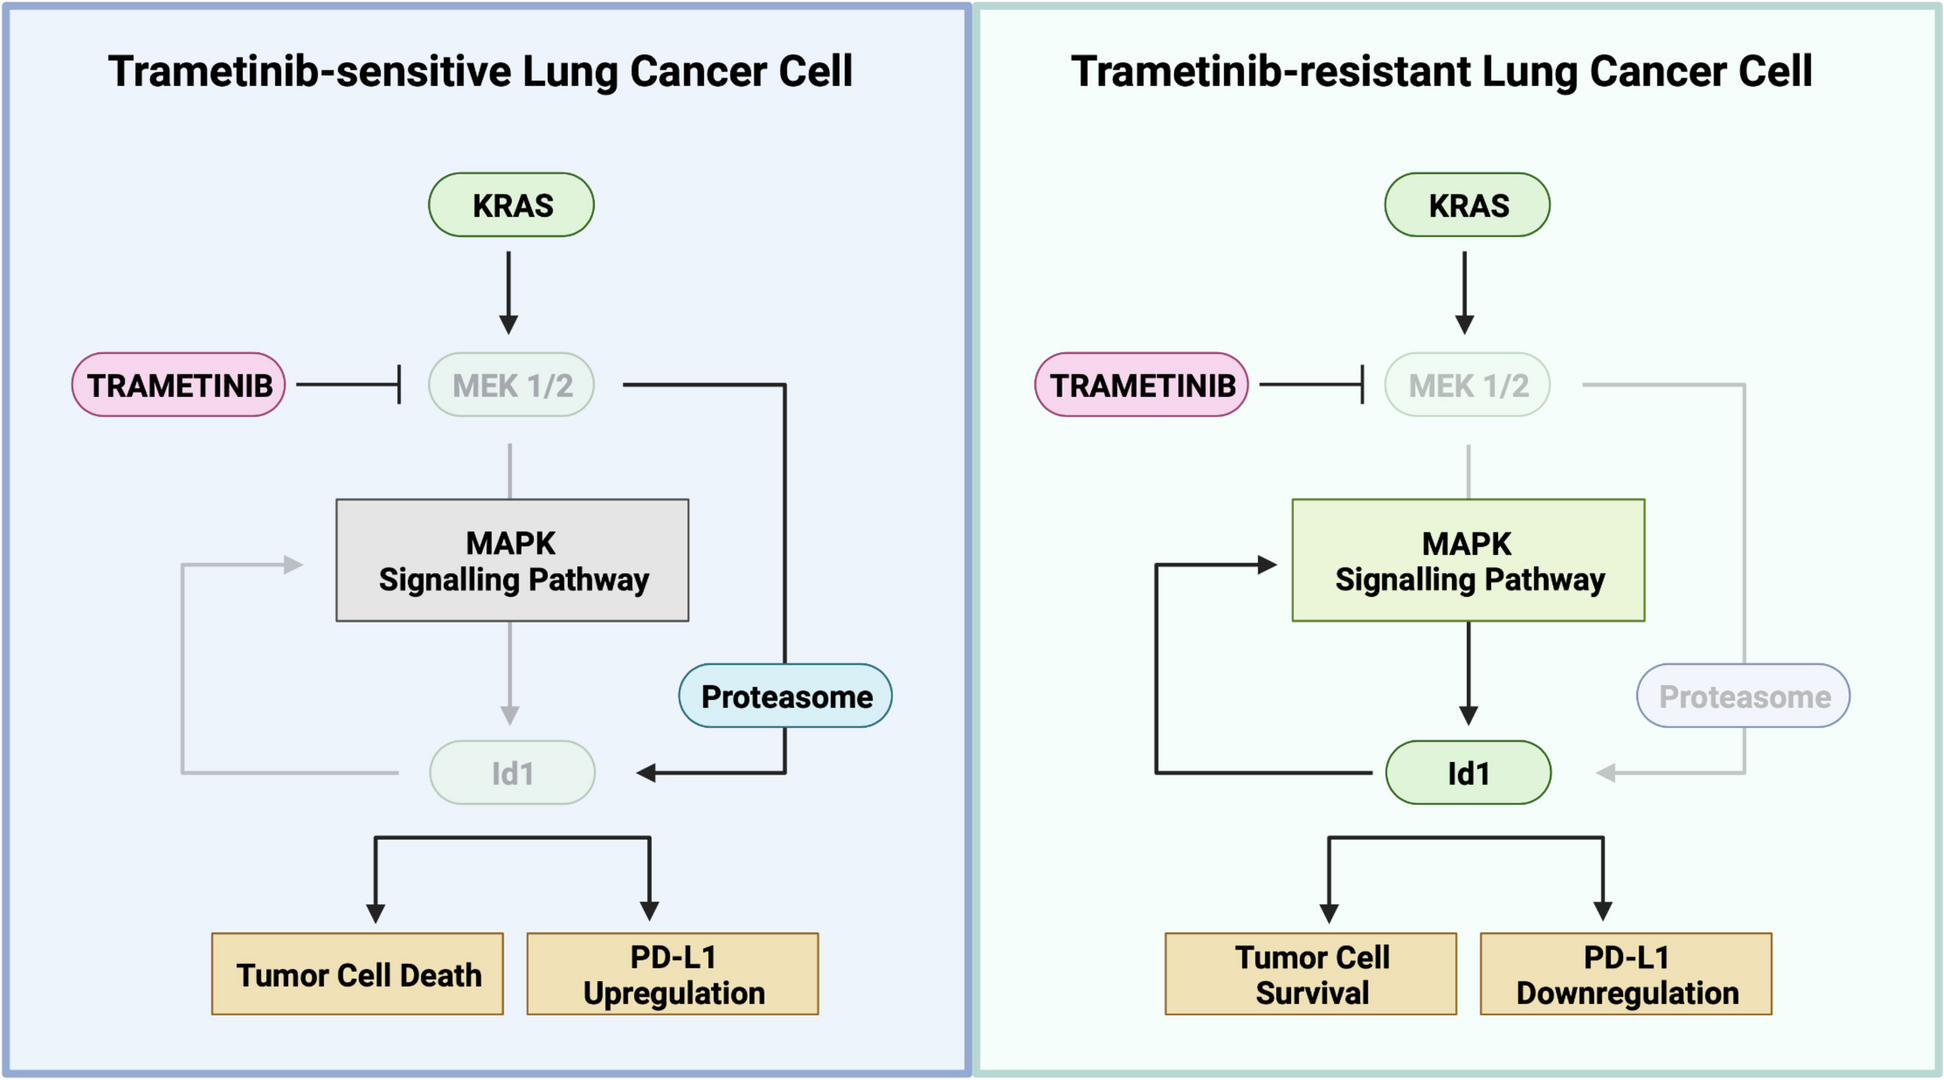 Trametinib sensitizes KRAS-mutant lung adenocarcinoma tumors to PD-1/PD-L1 axis blockade via Id1 downregulation